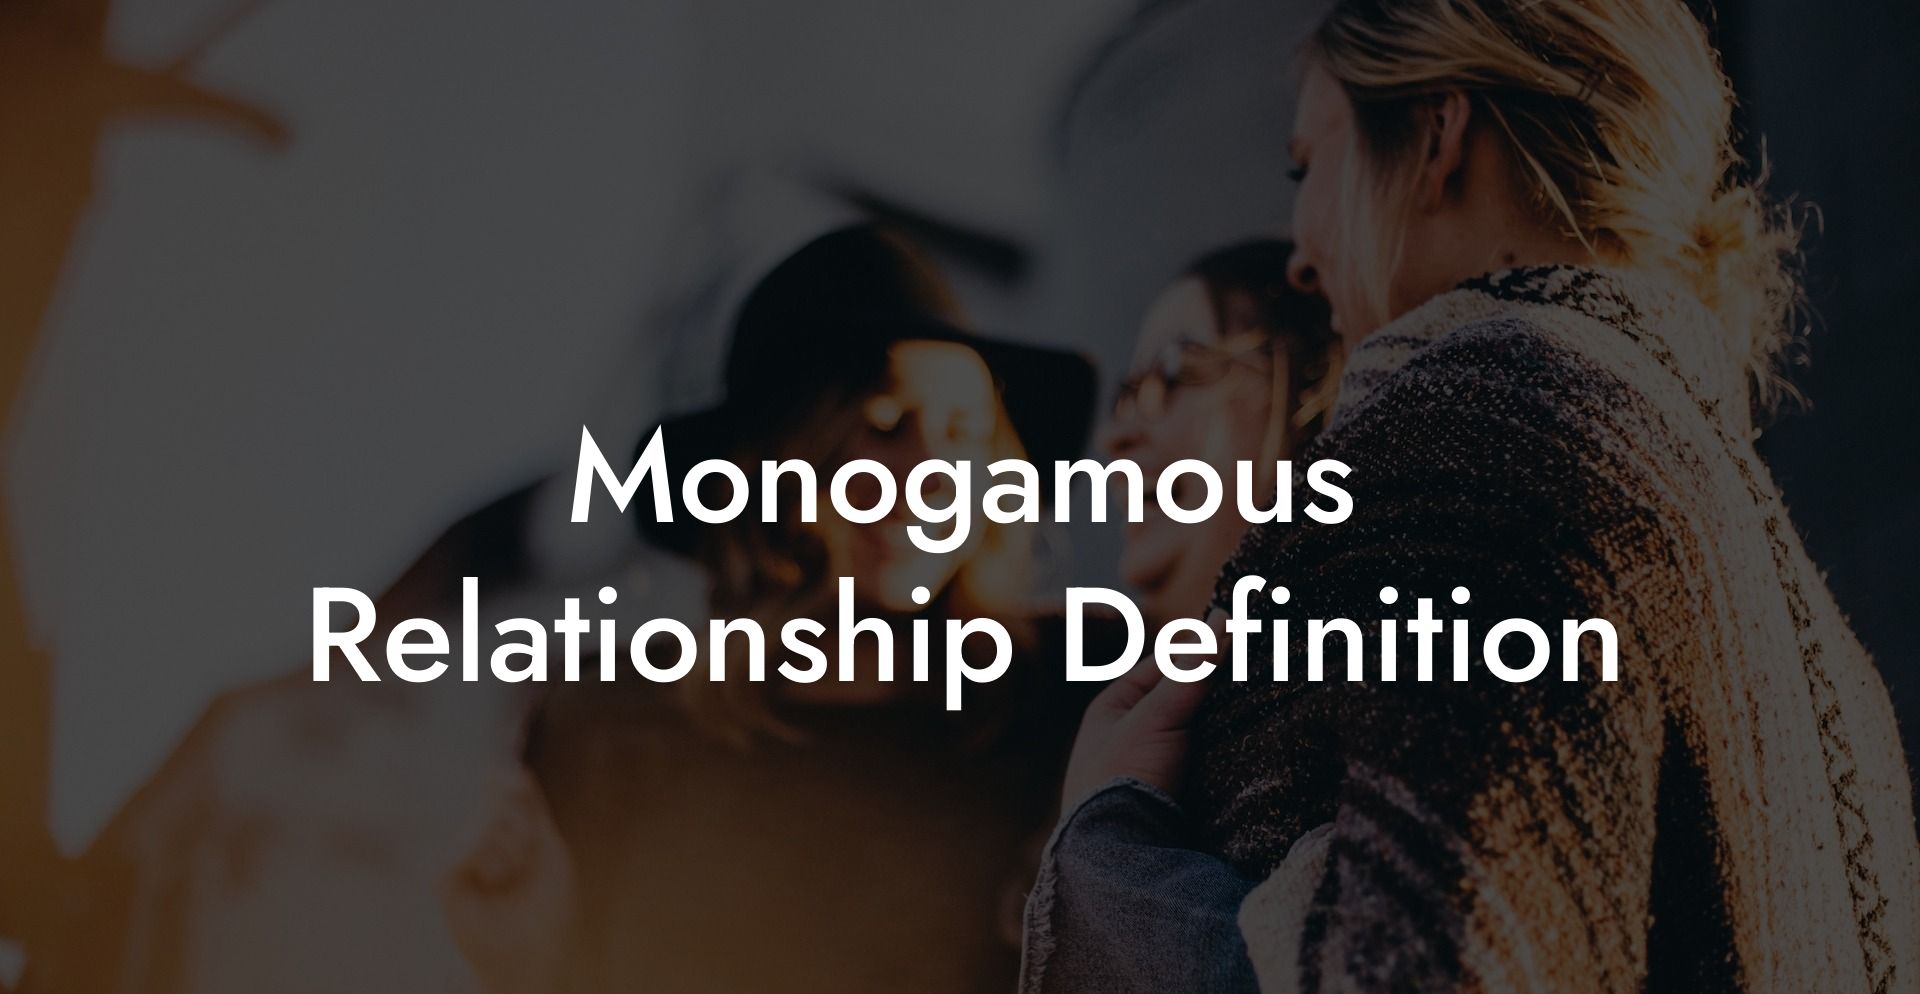 Monogamous Relationship Definition